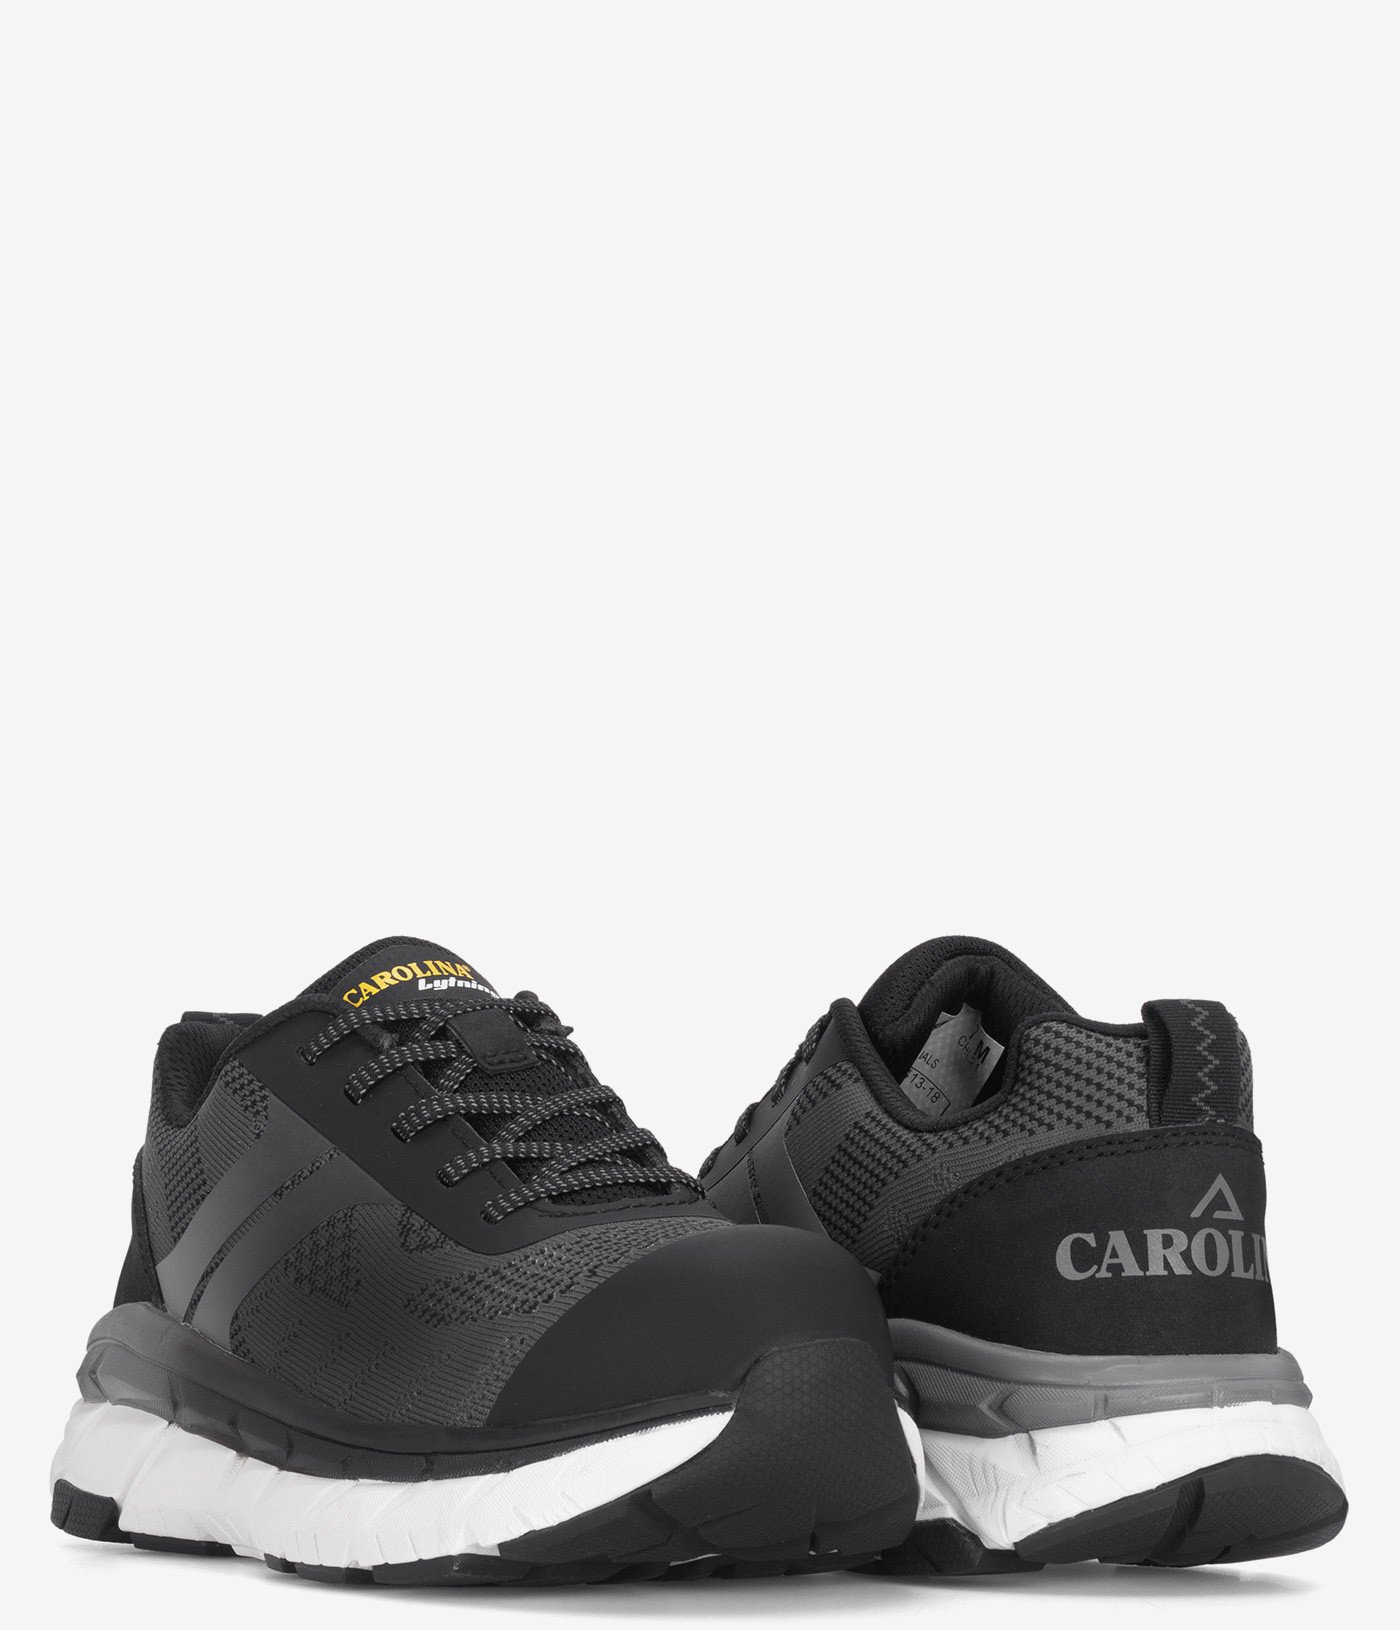 Carolina Align Azalea Composite Safety Toe Athletic Shoe | Pair